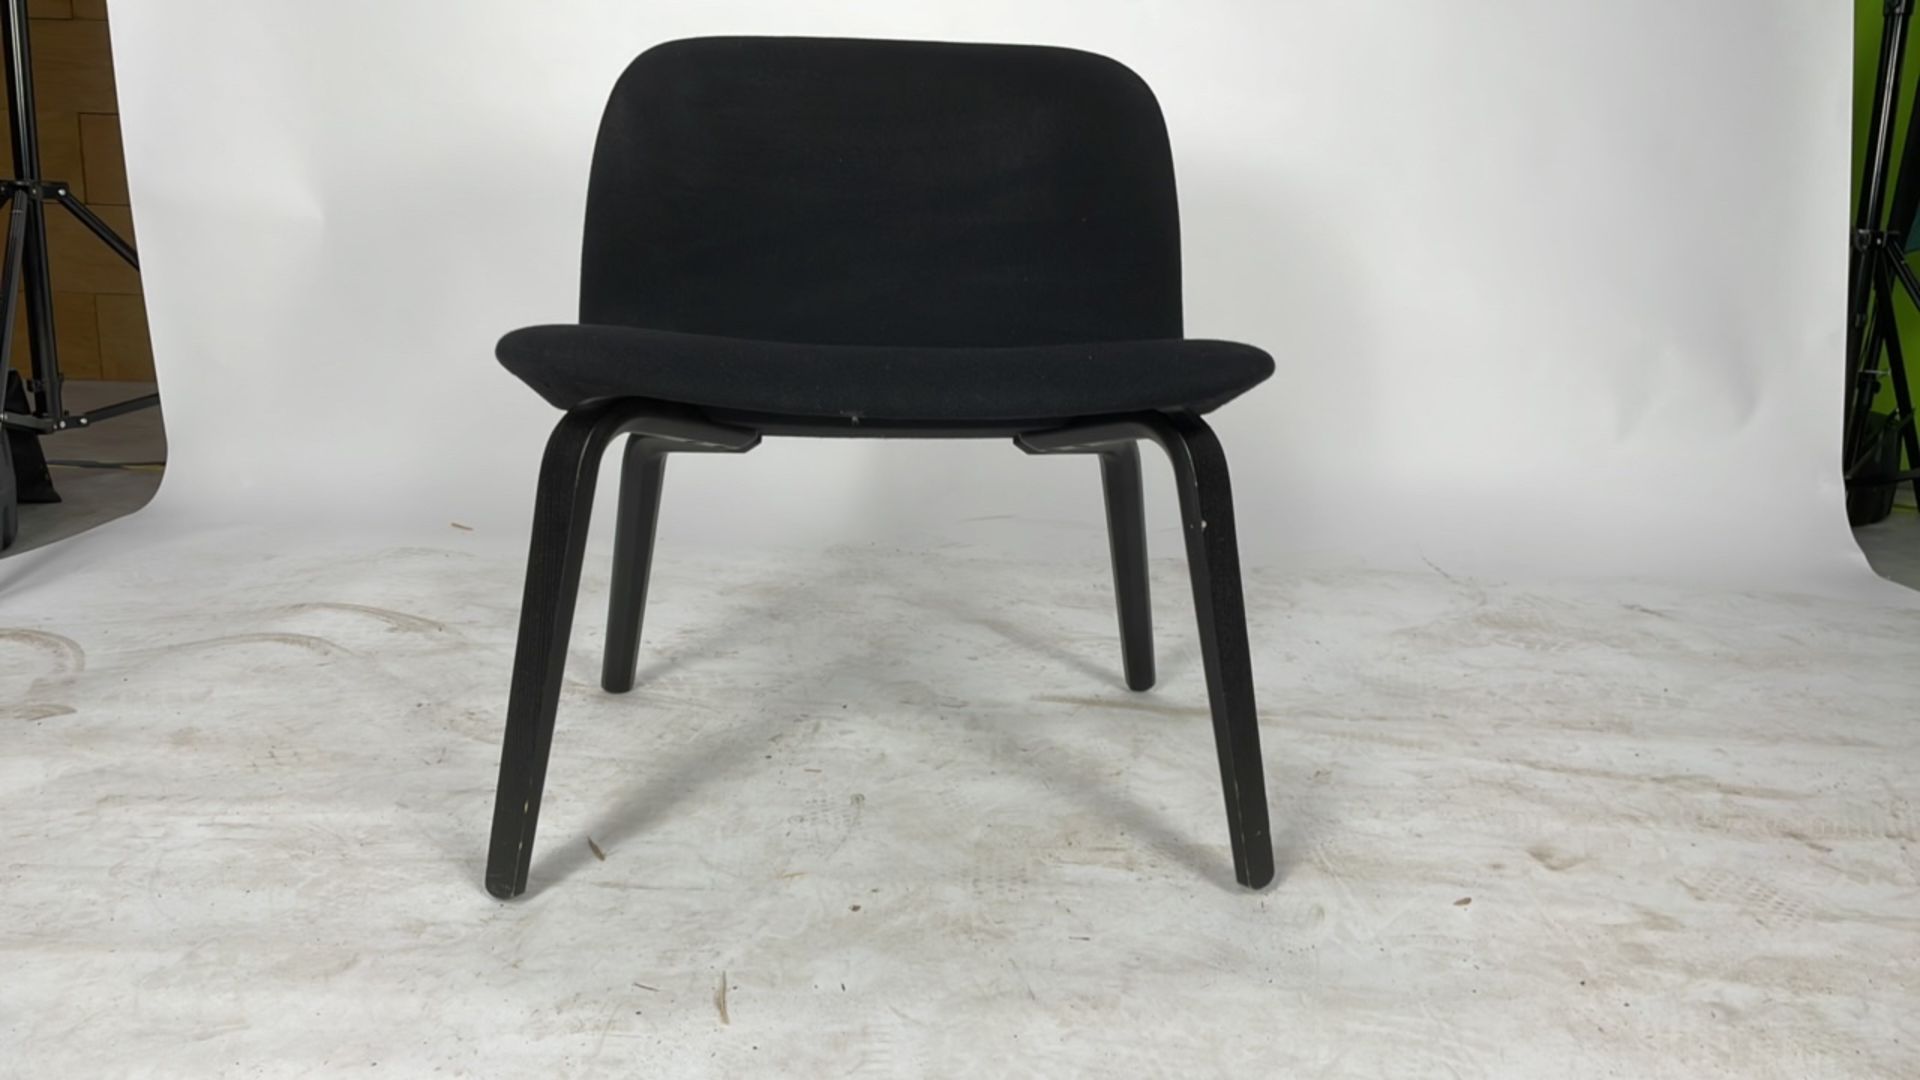 Black urban chair. - Image 3 of 3